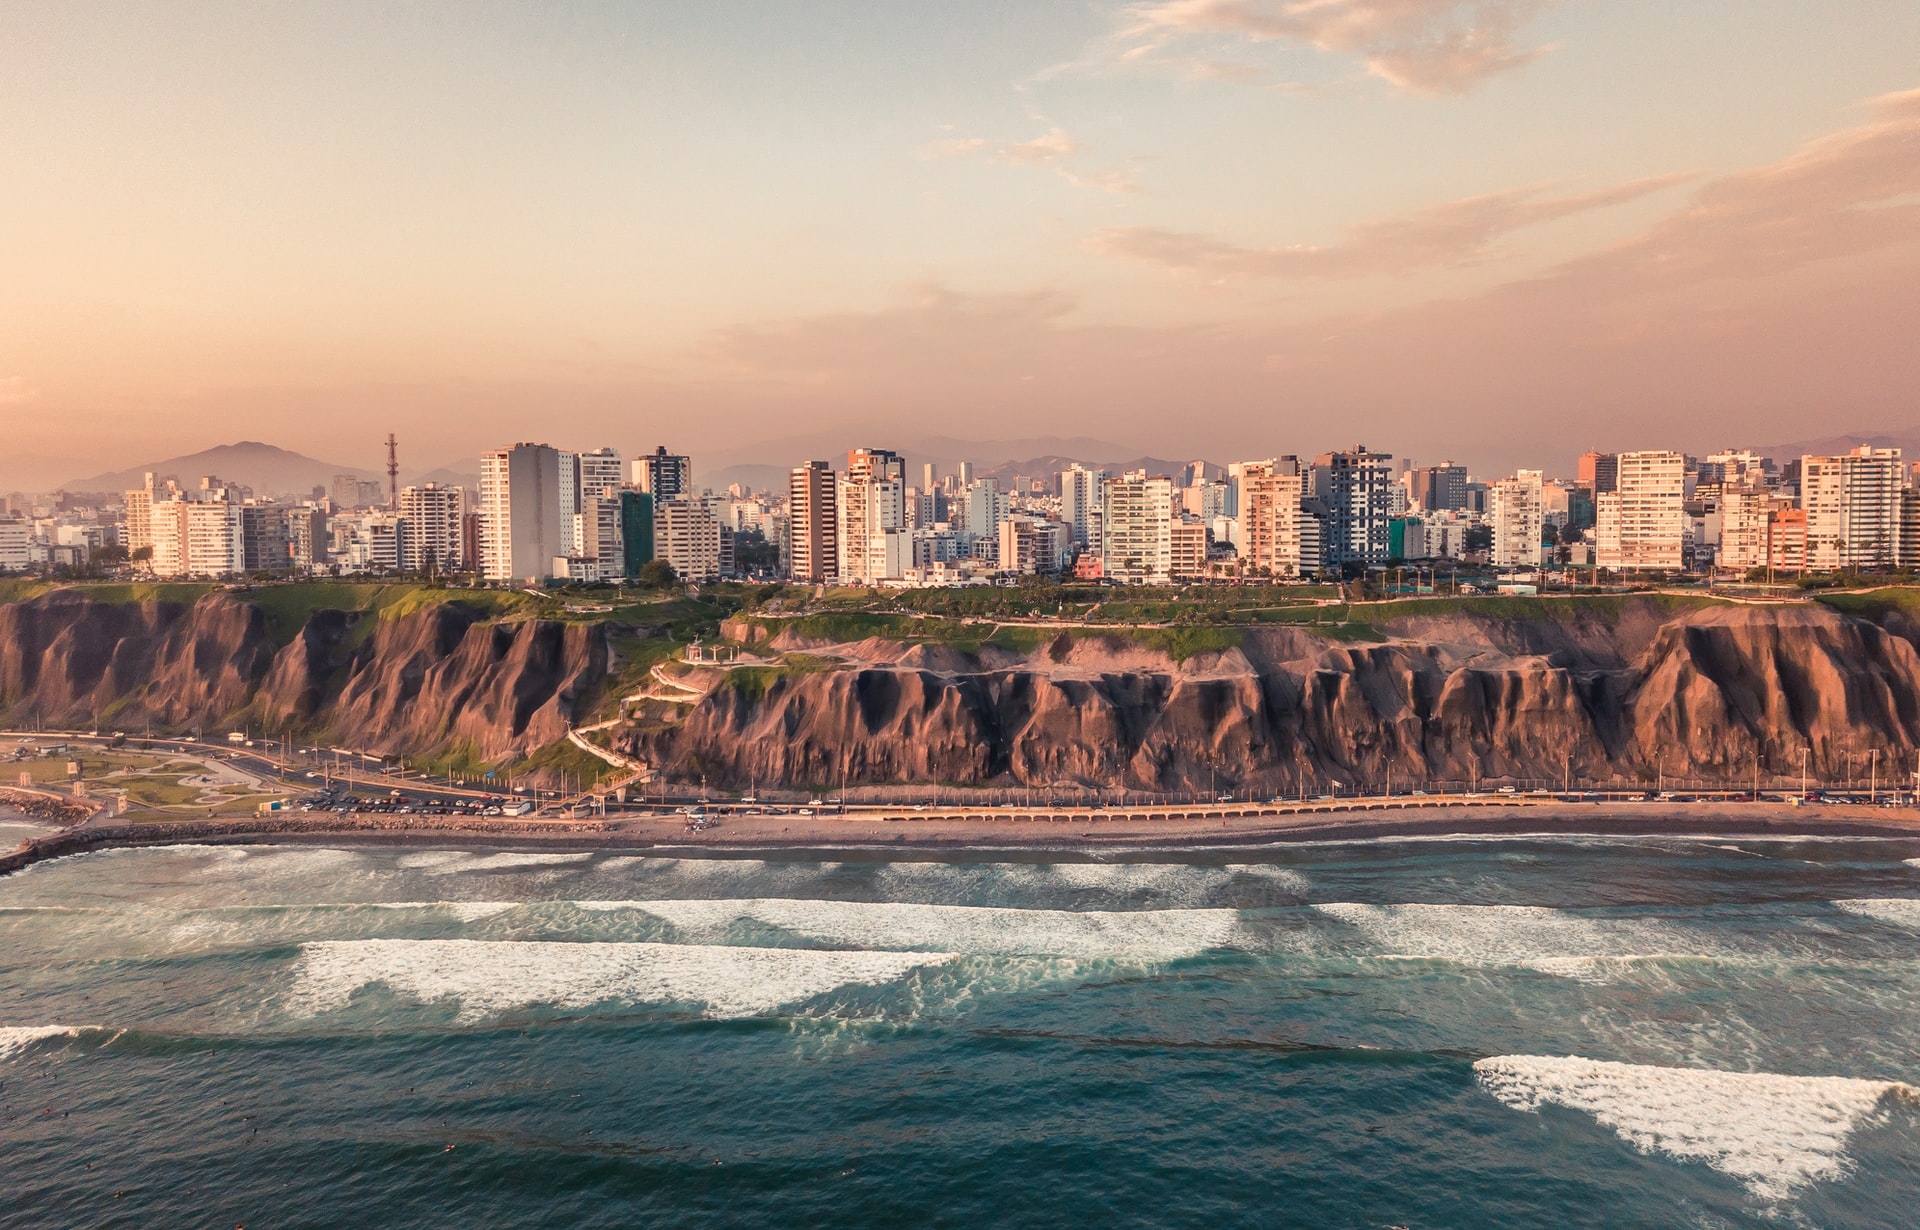 Lima: Peru's Capital City